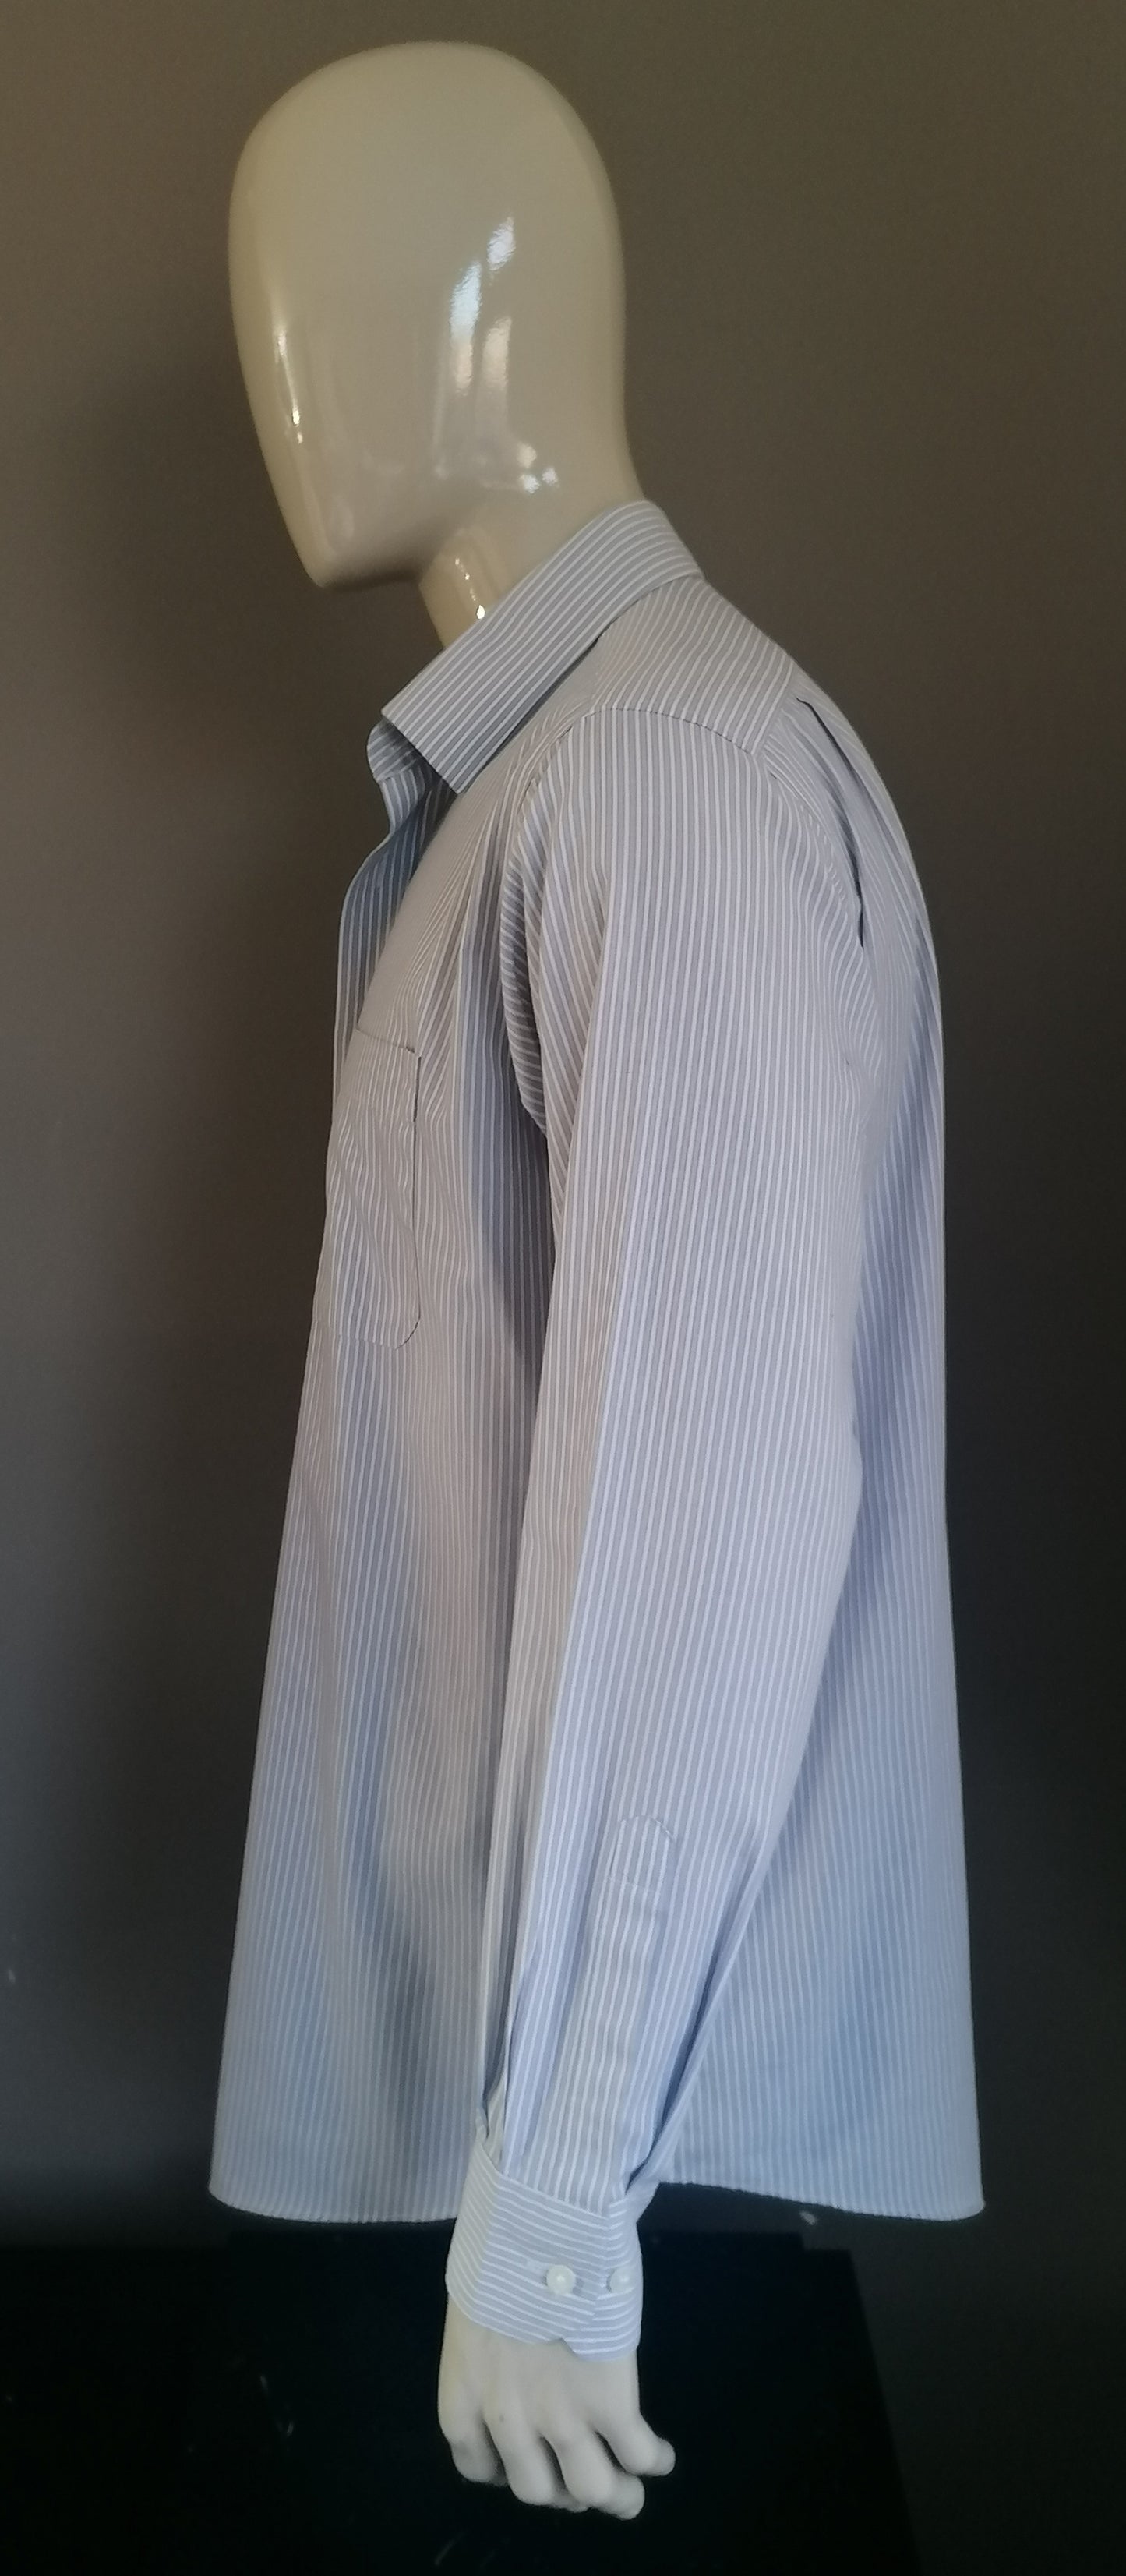 M&S Man (Marks & Spencer) shirt. Gray white striped. Size 43 / XL. Regular fit.